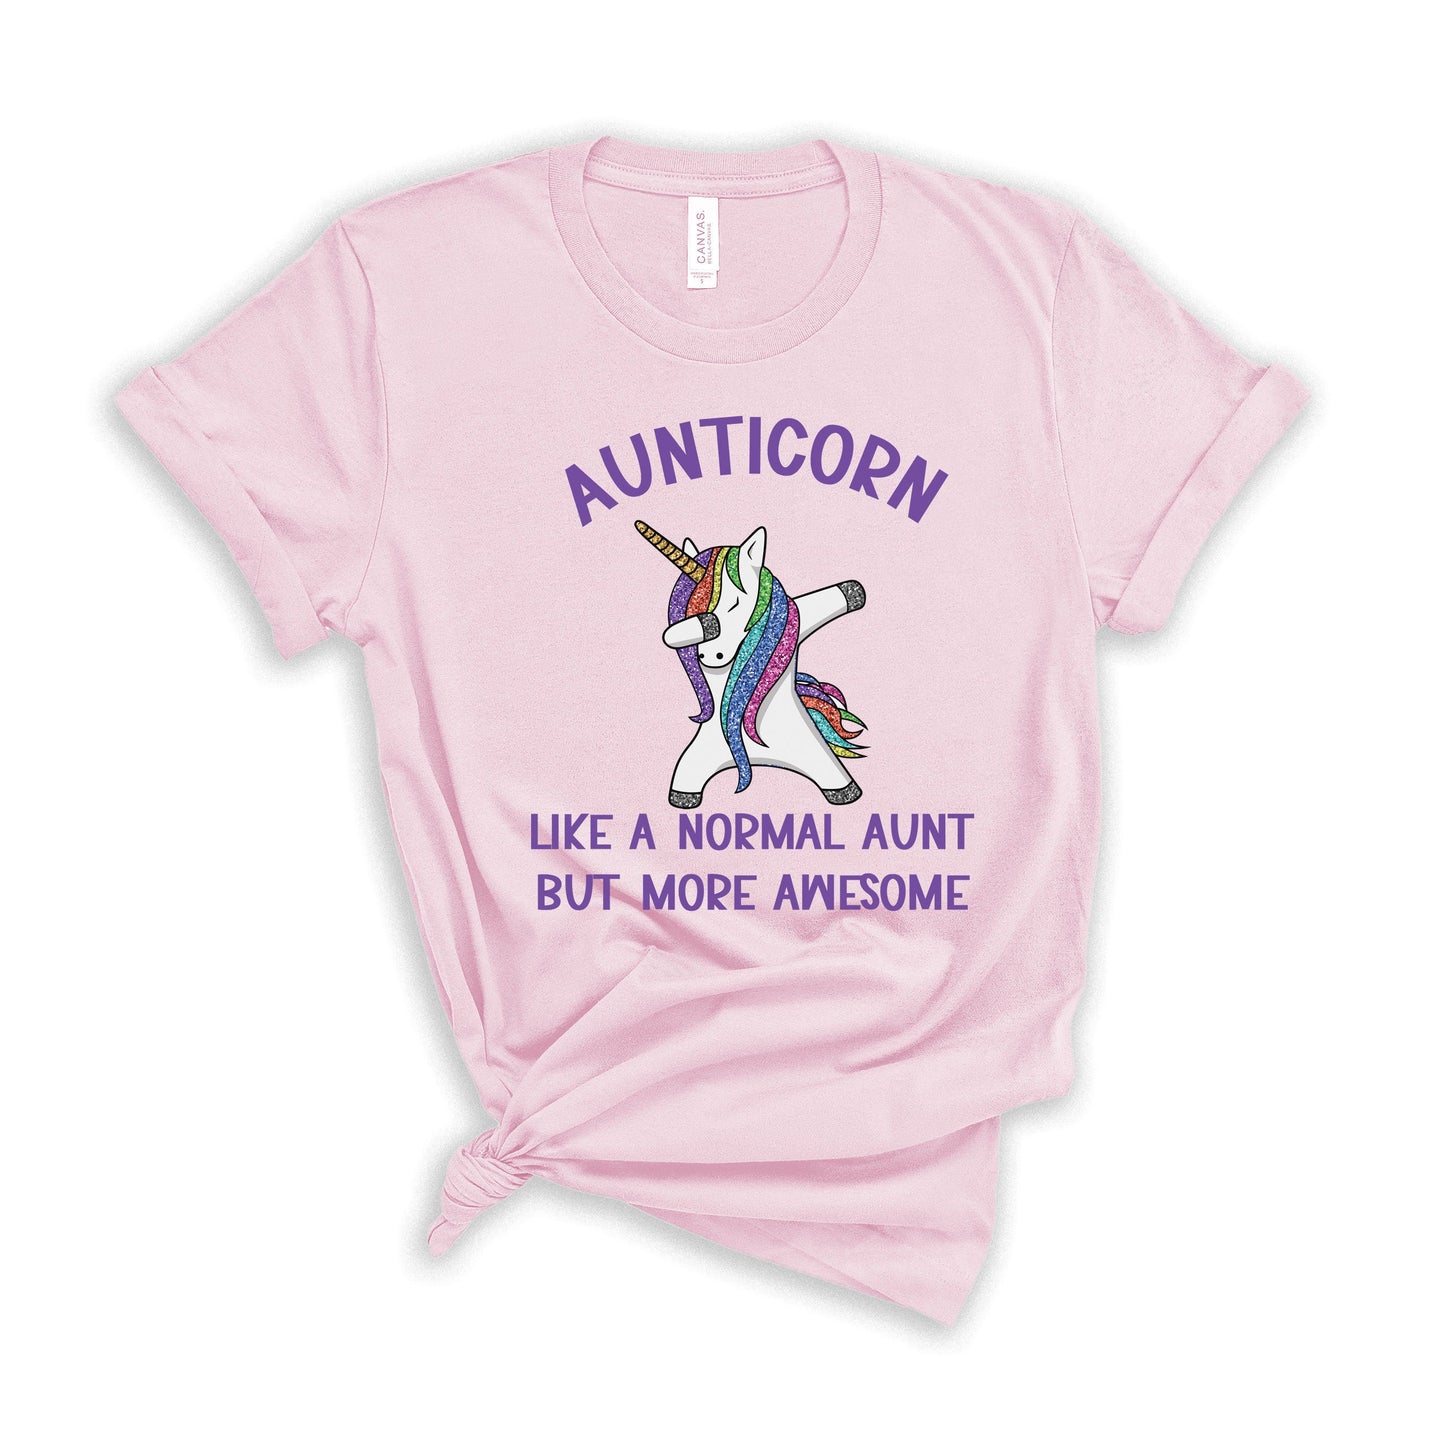 Aunticorn T-Shirt